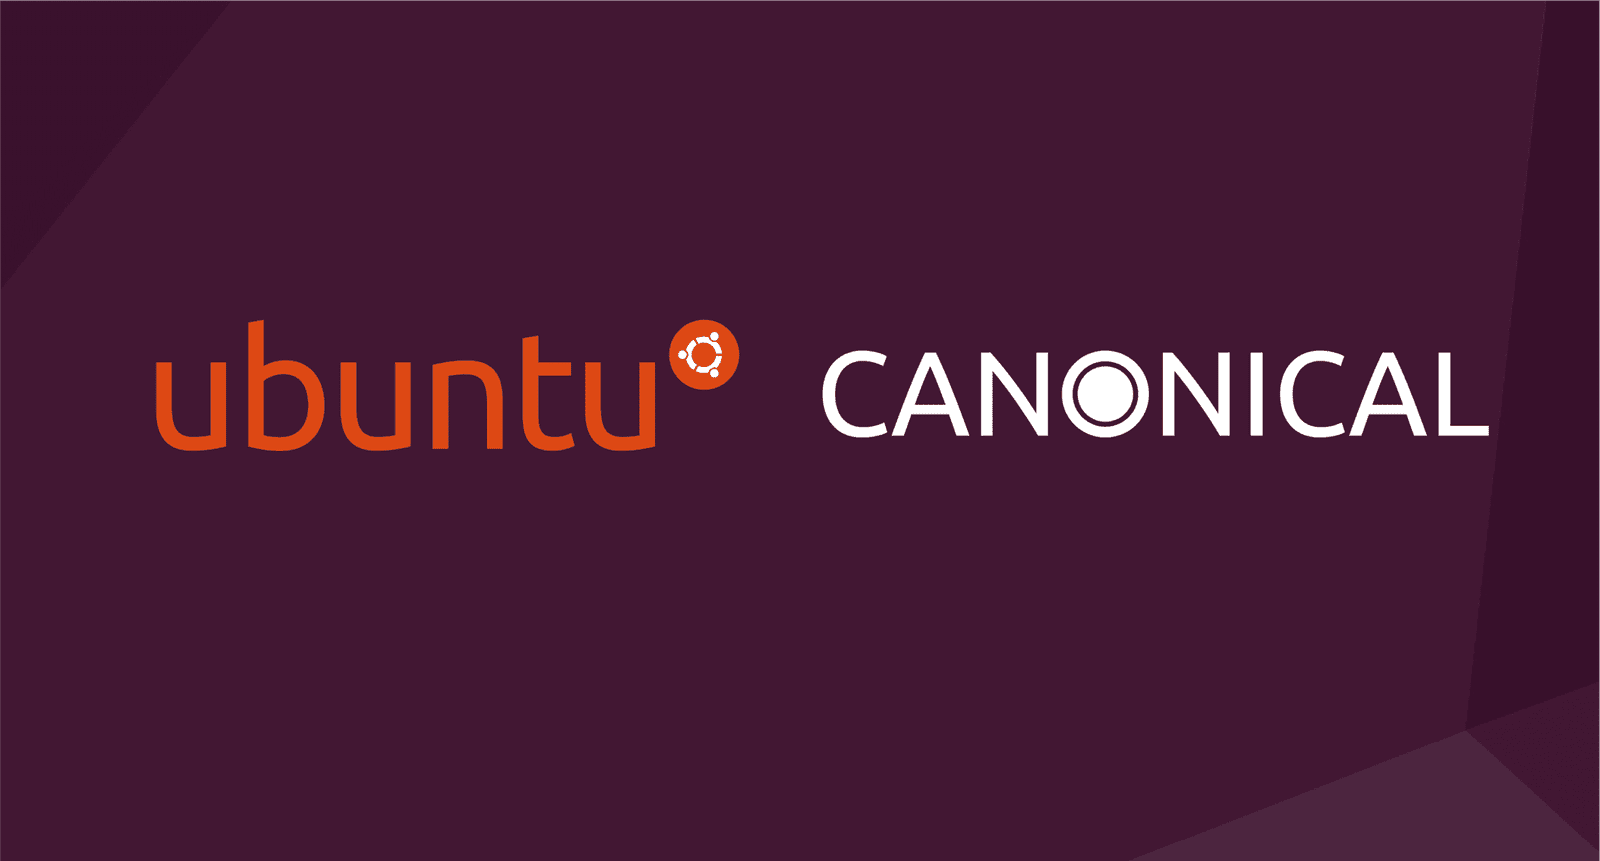 Canonical Ubuntu at mobile world congress